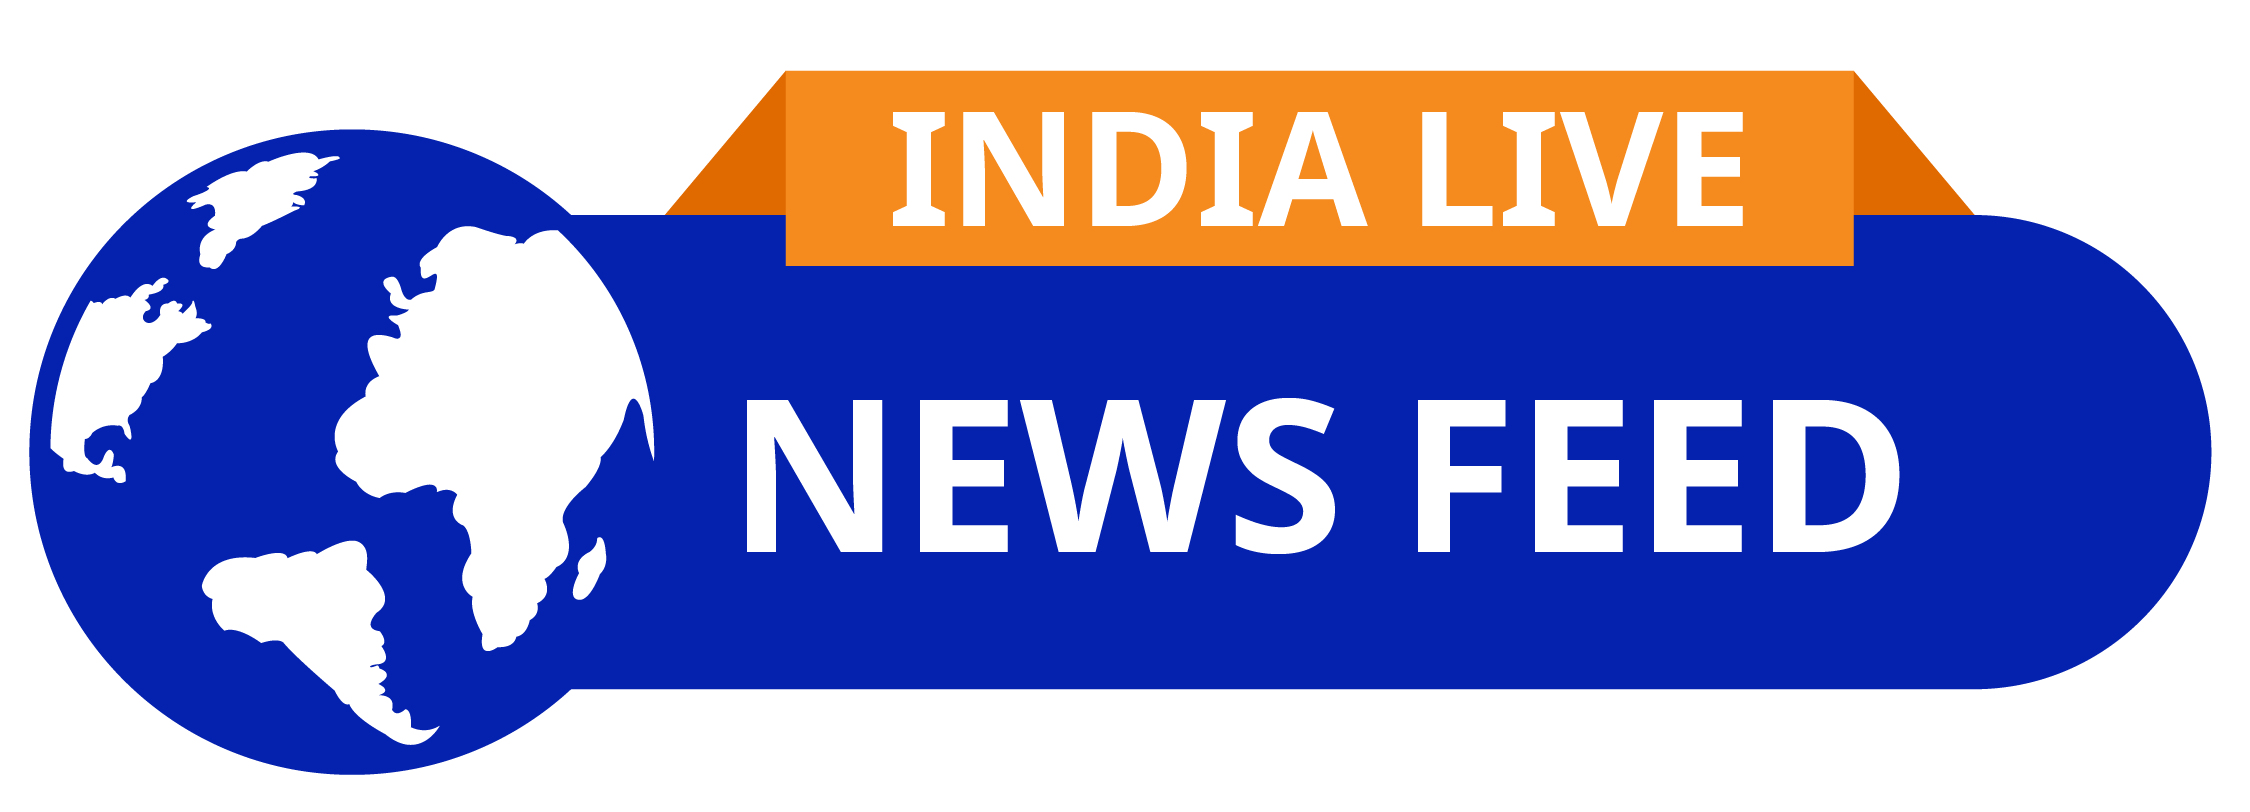 India Live News Feed